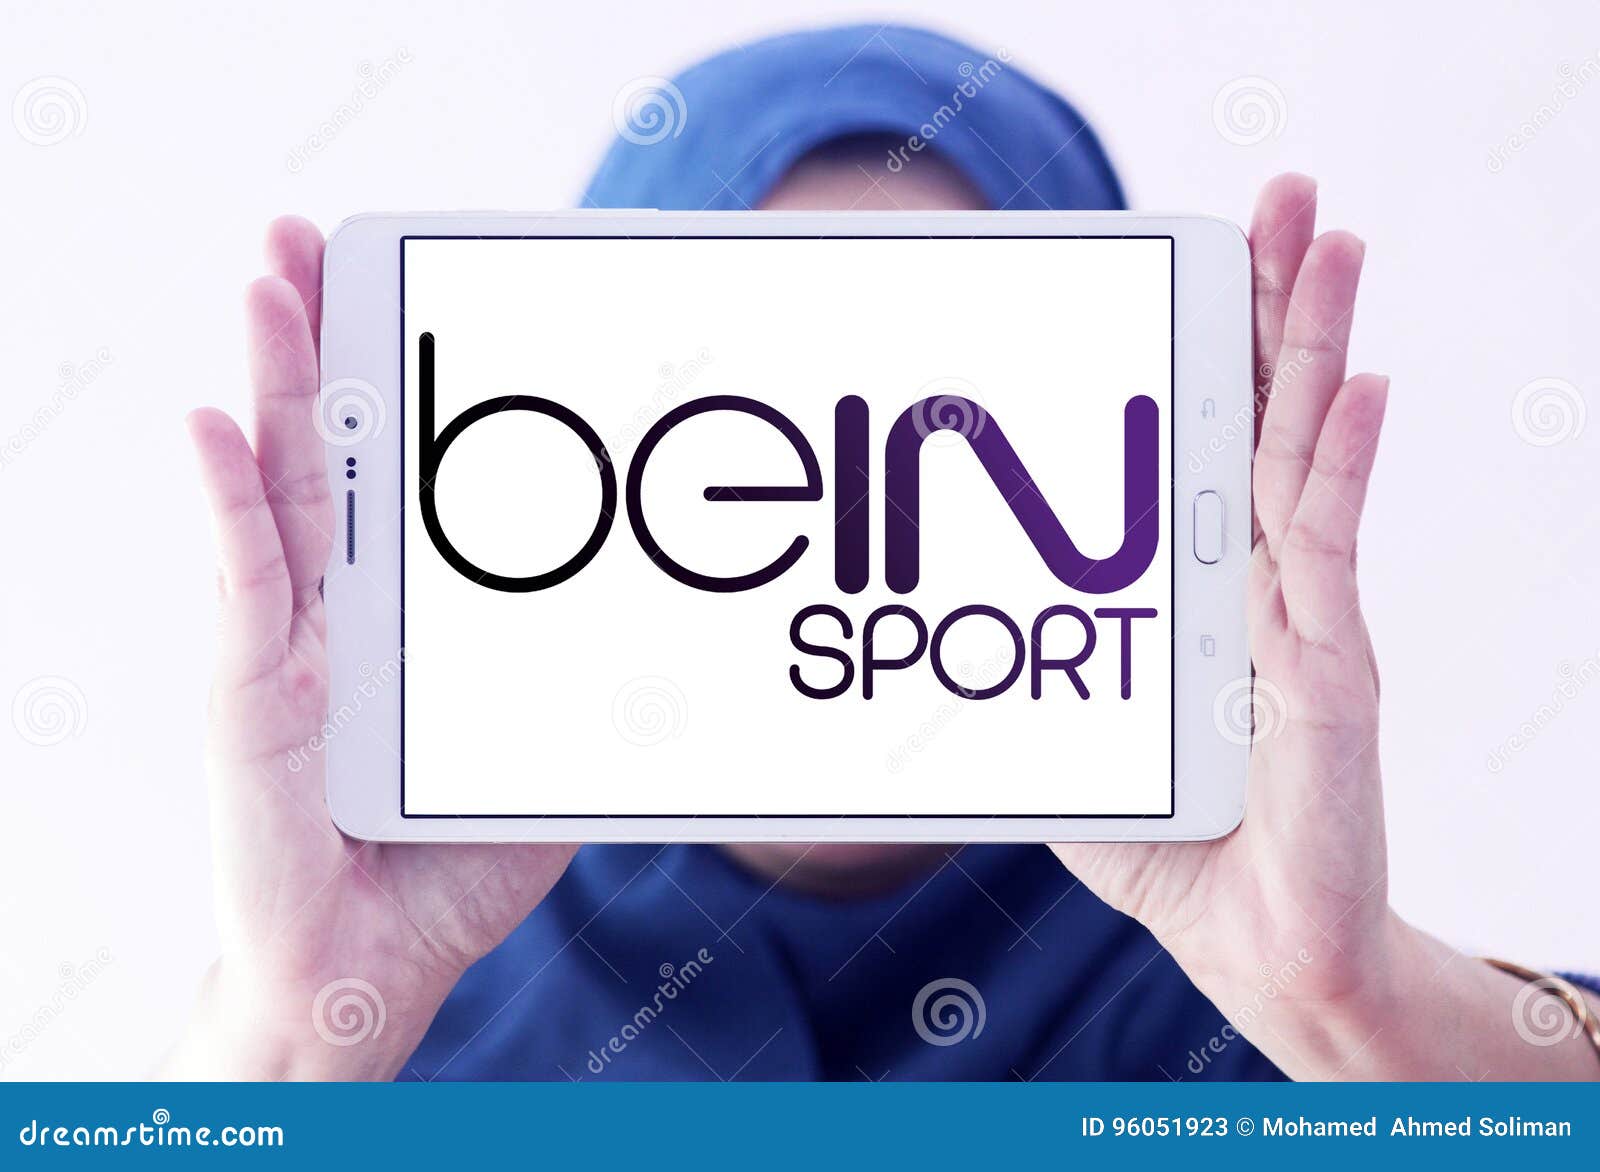 Bein sport logo editorial stock photo